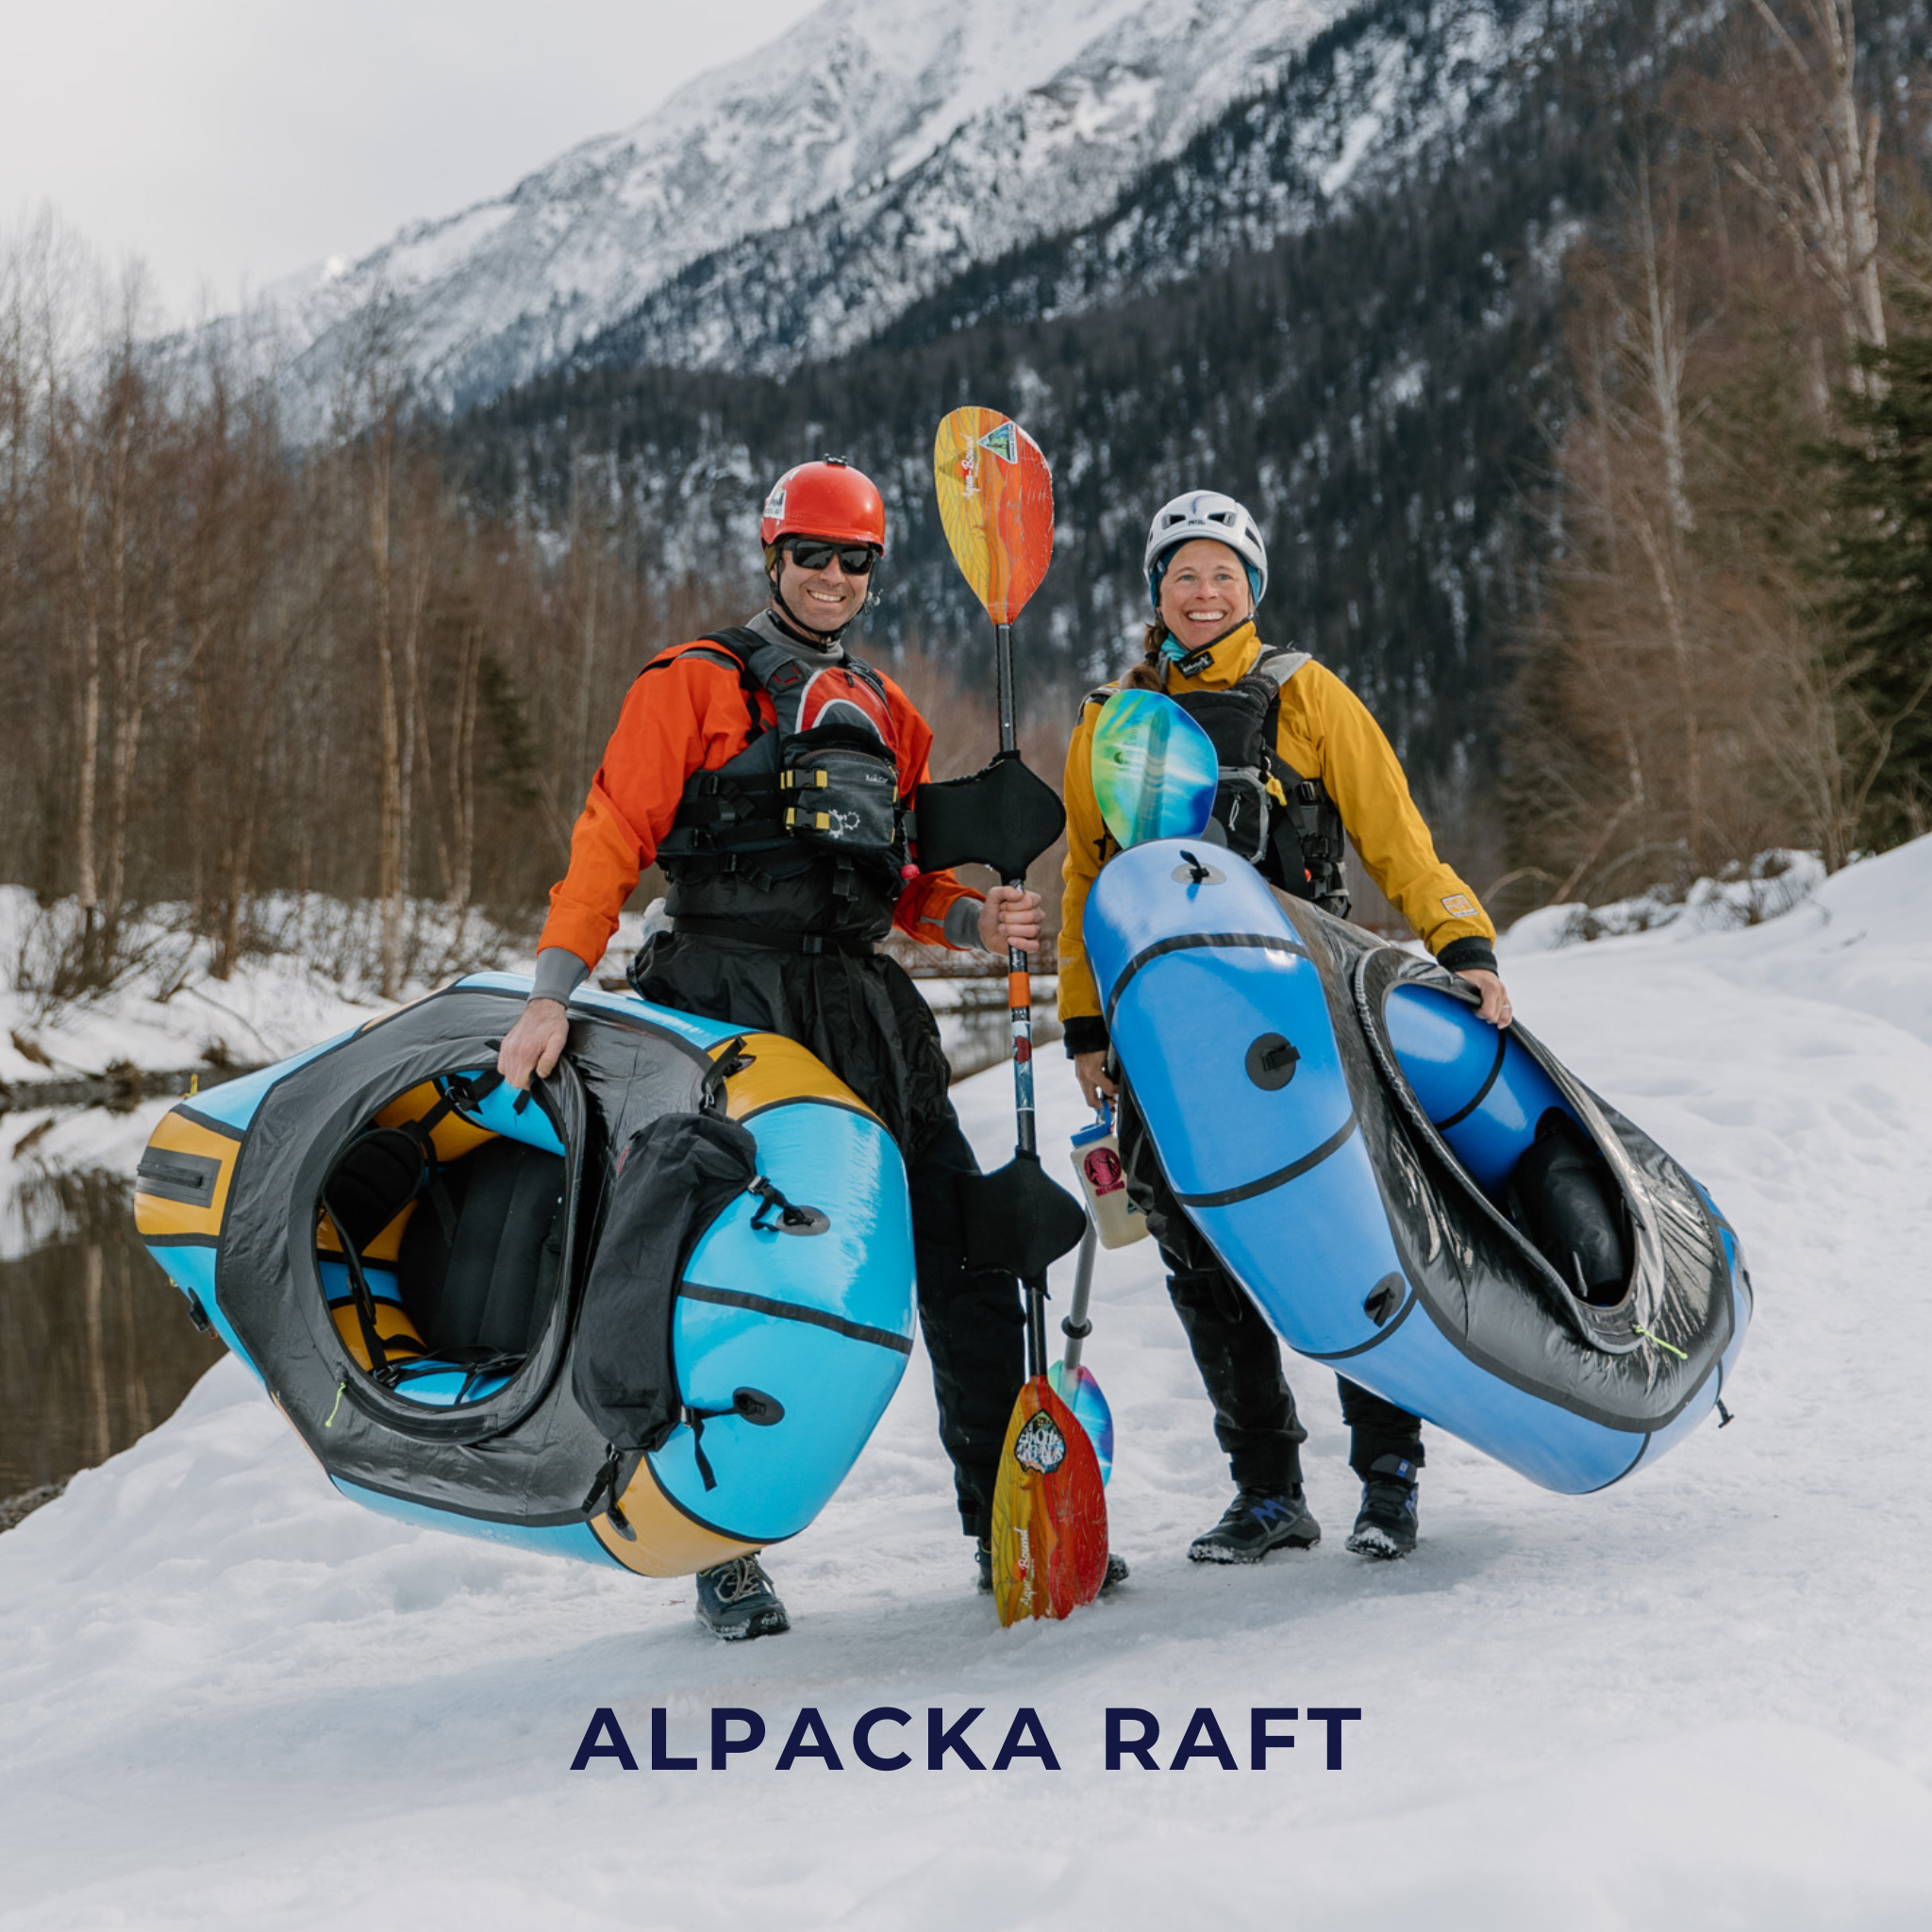 Alpacka Raft